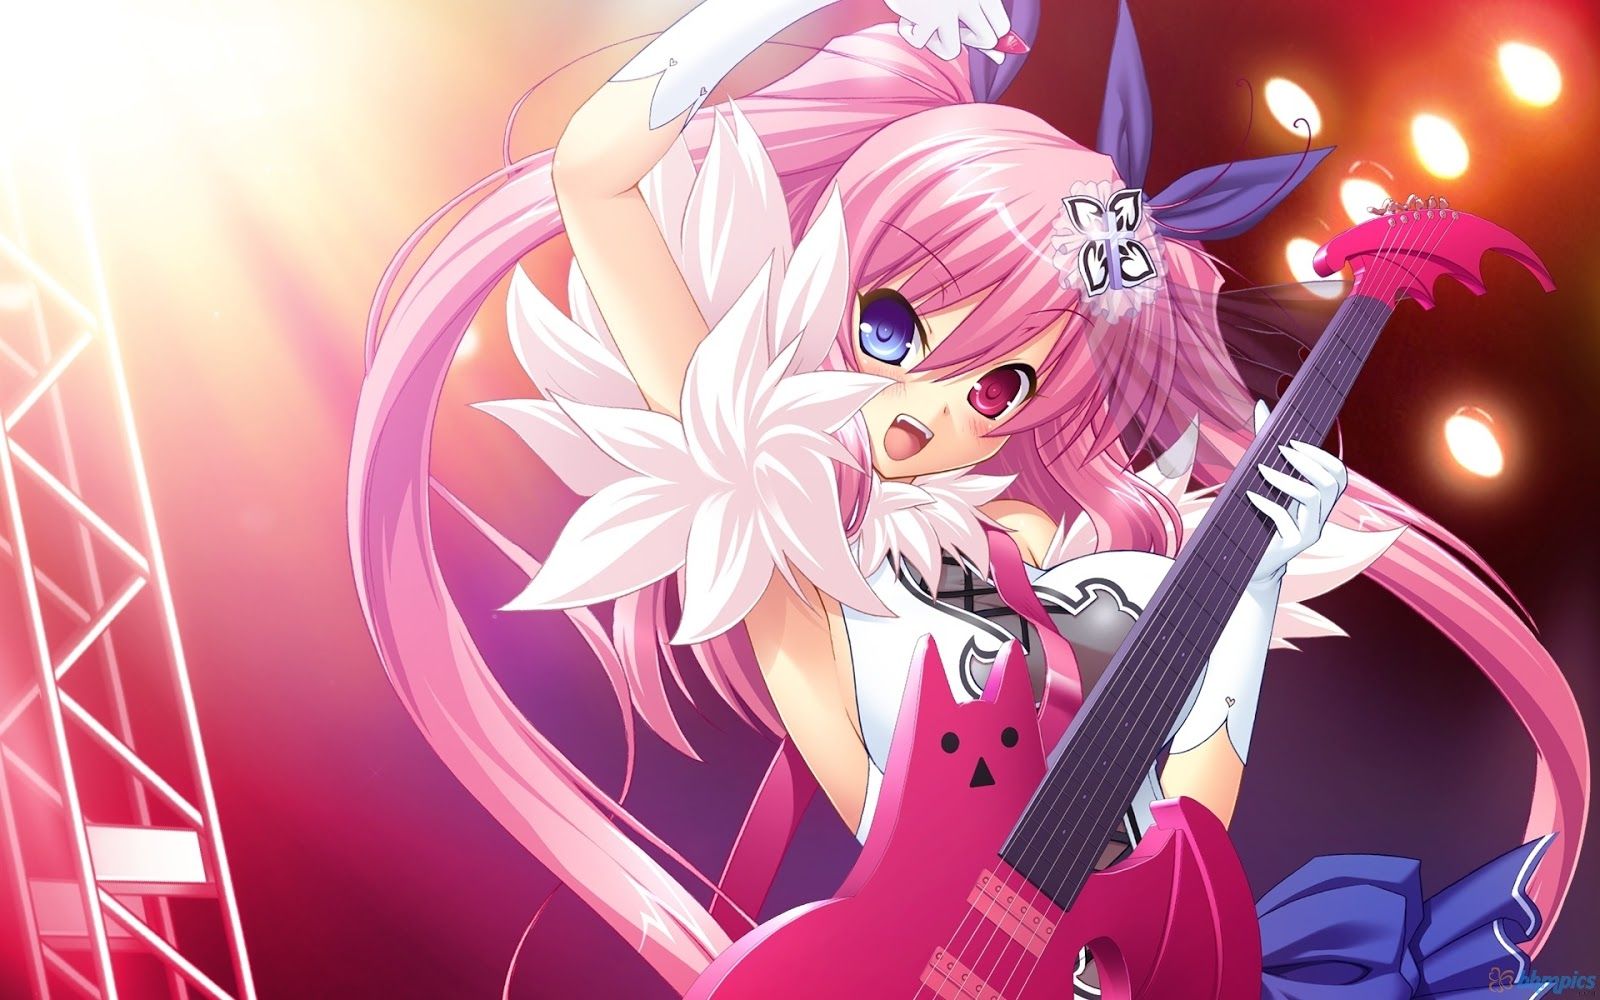 HQ Wallpaper Arena: Pink Hair Anime Girl Wallpaper